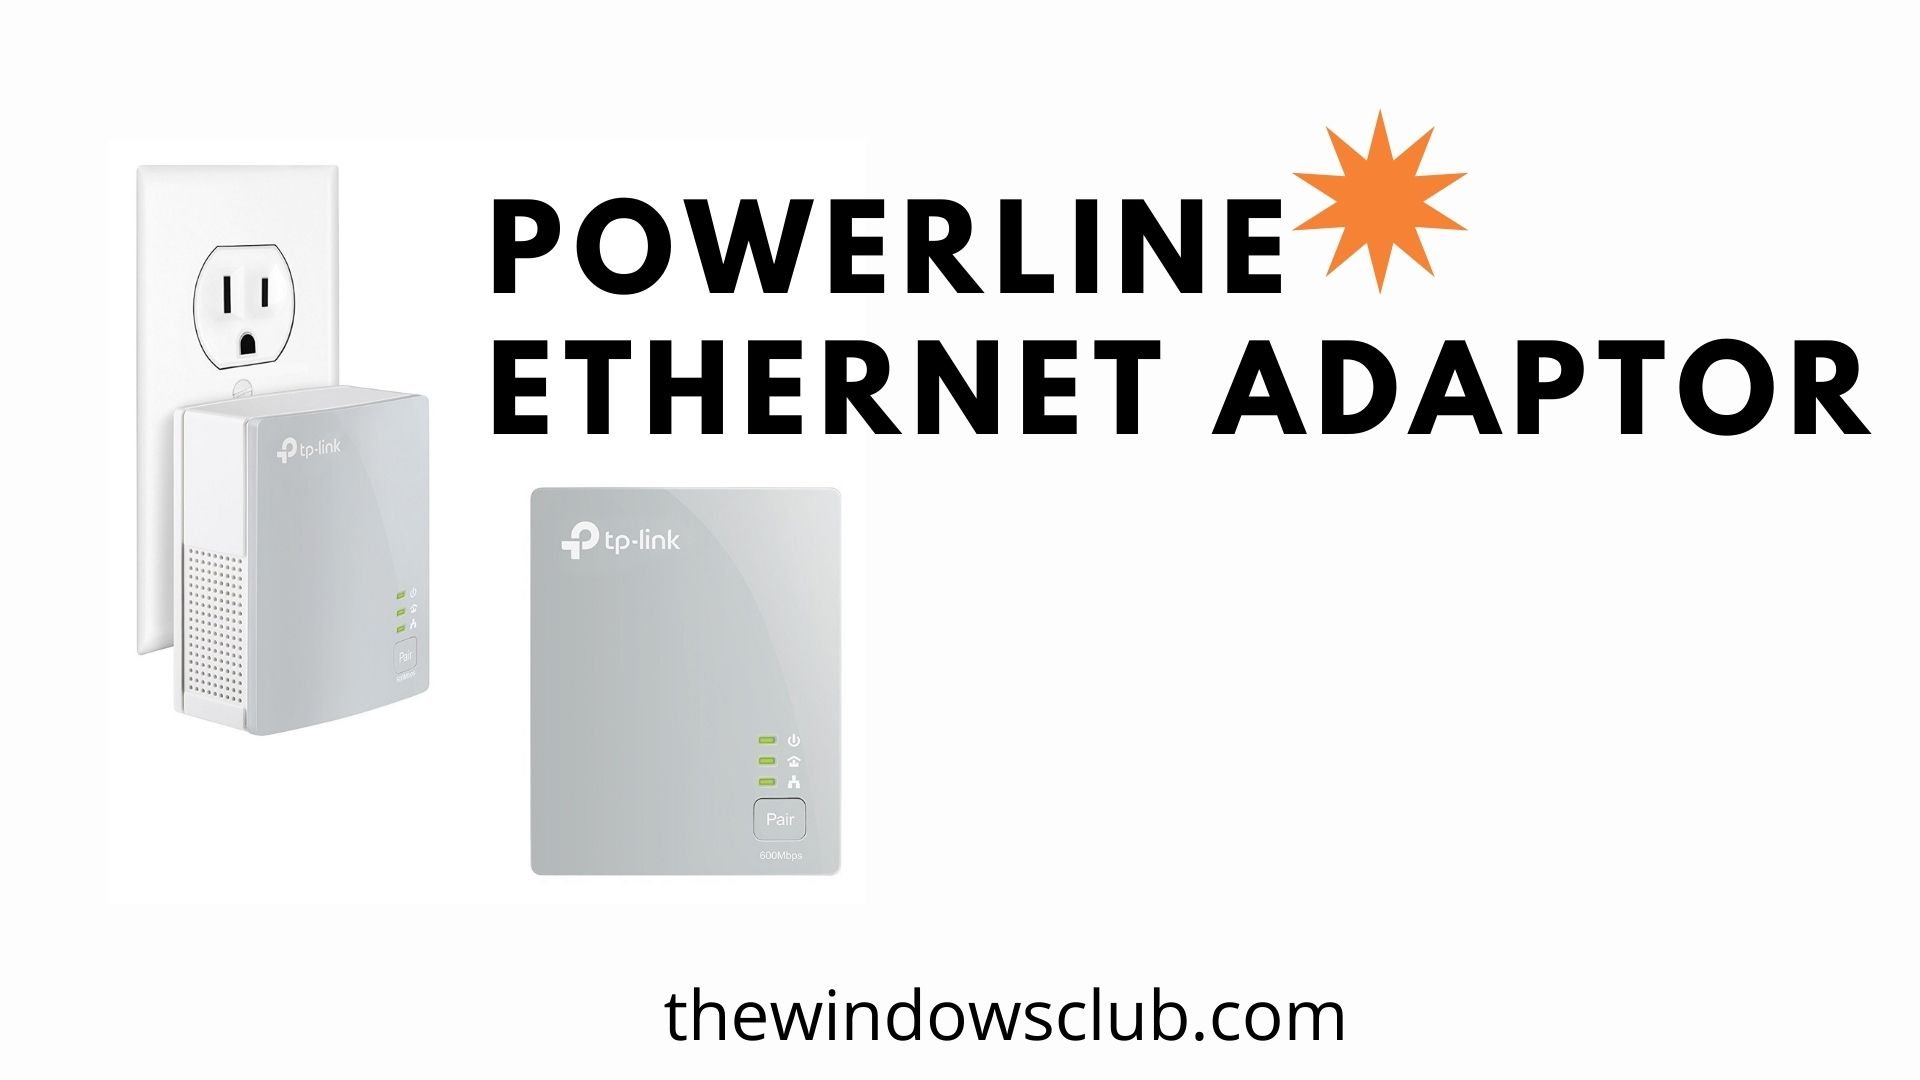 Powerline Ethernet Adaptor (1)